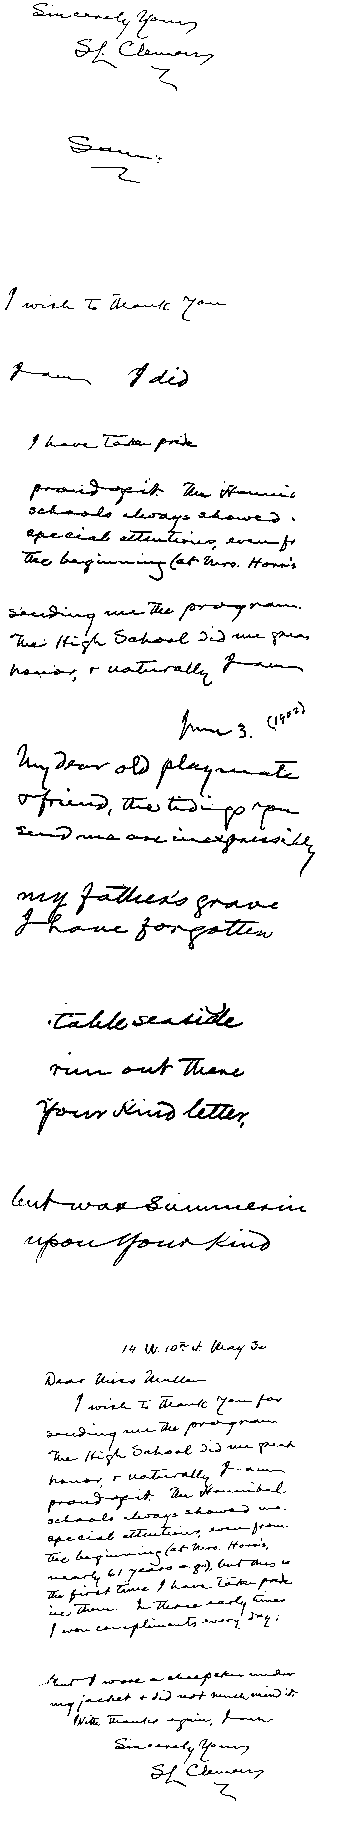 mark twain handwriting